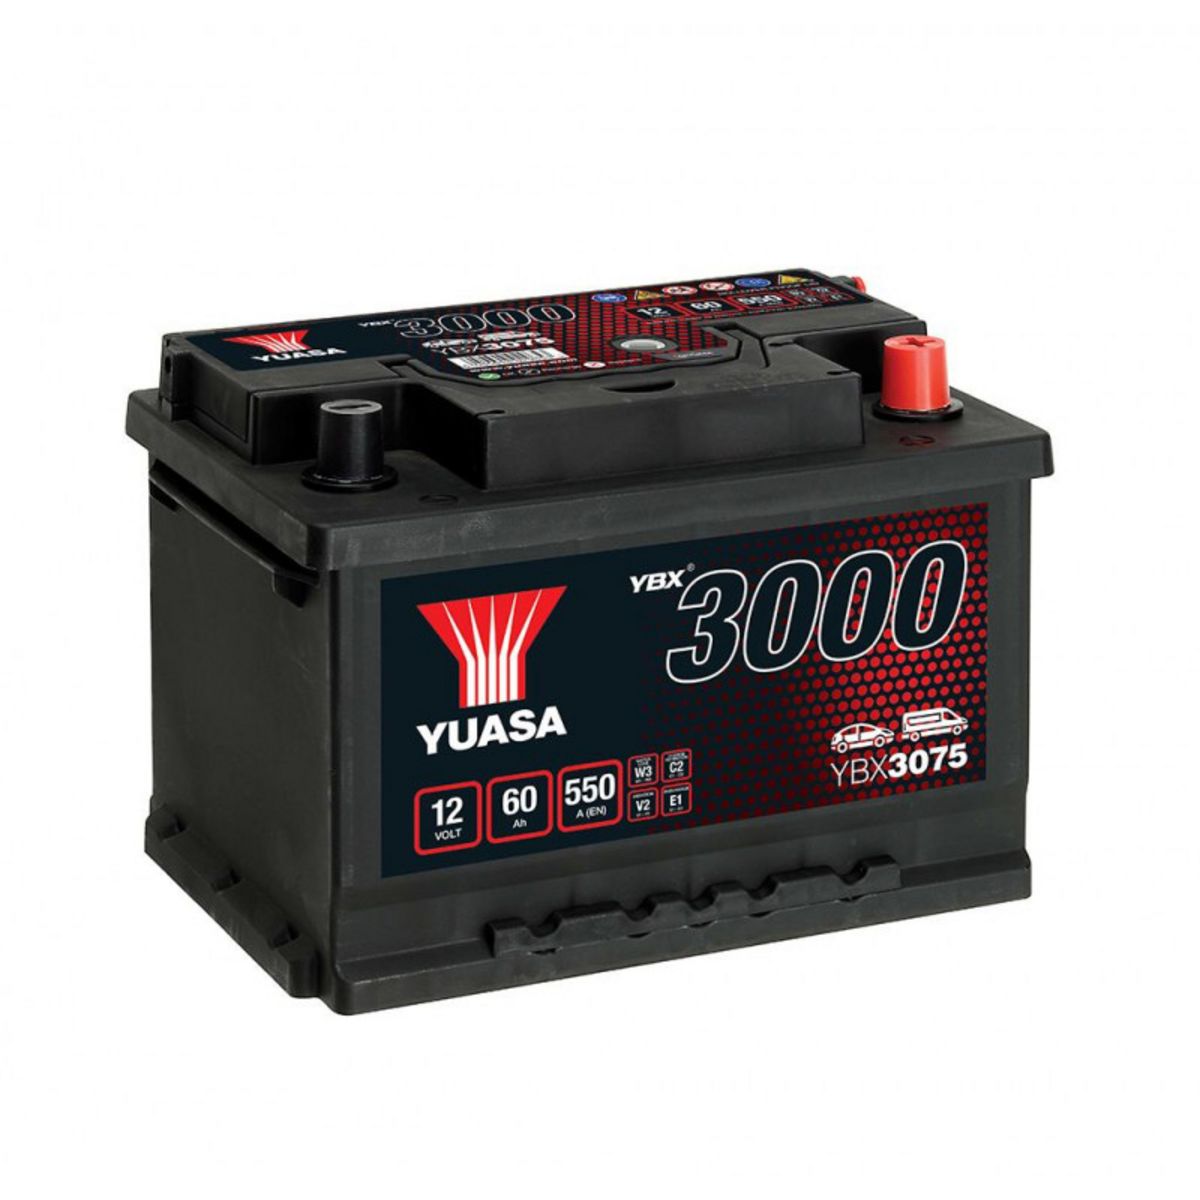 YUASA Batterie Yuasa SMF YBX3075 12V 60ah 550A pas cher 